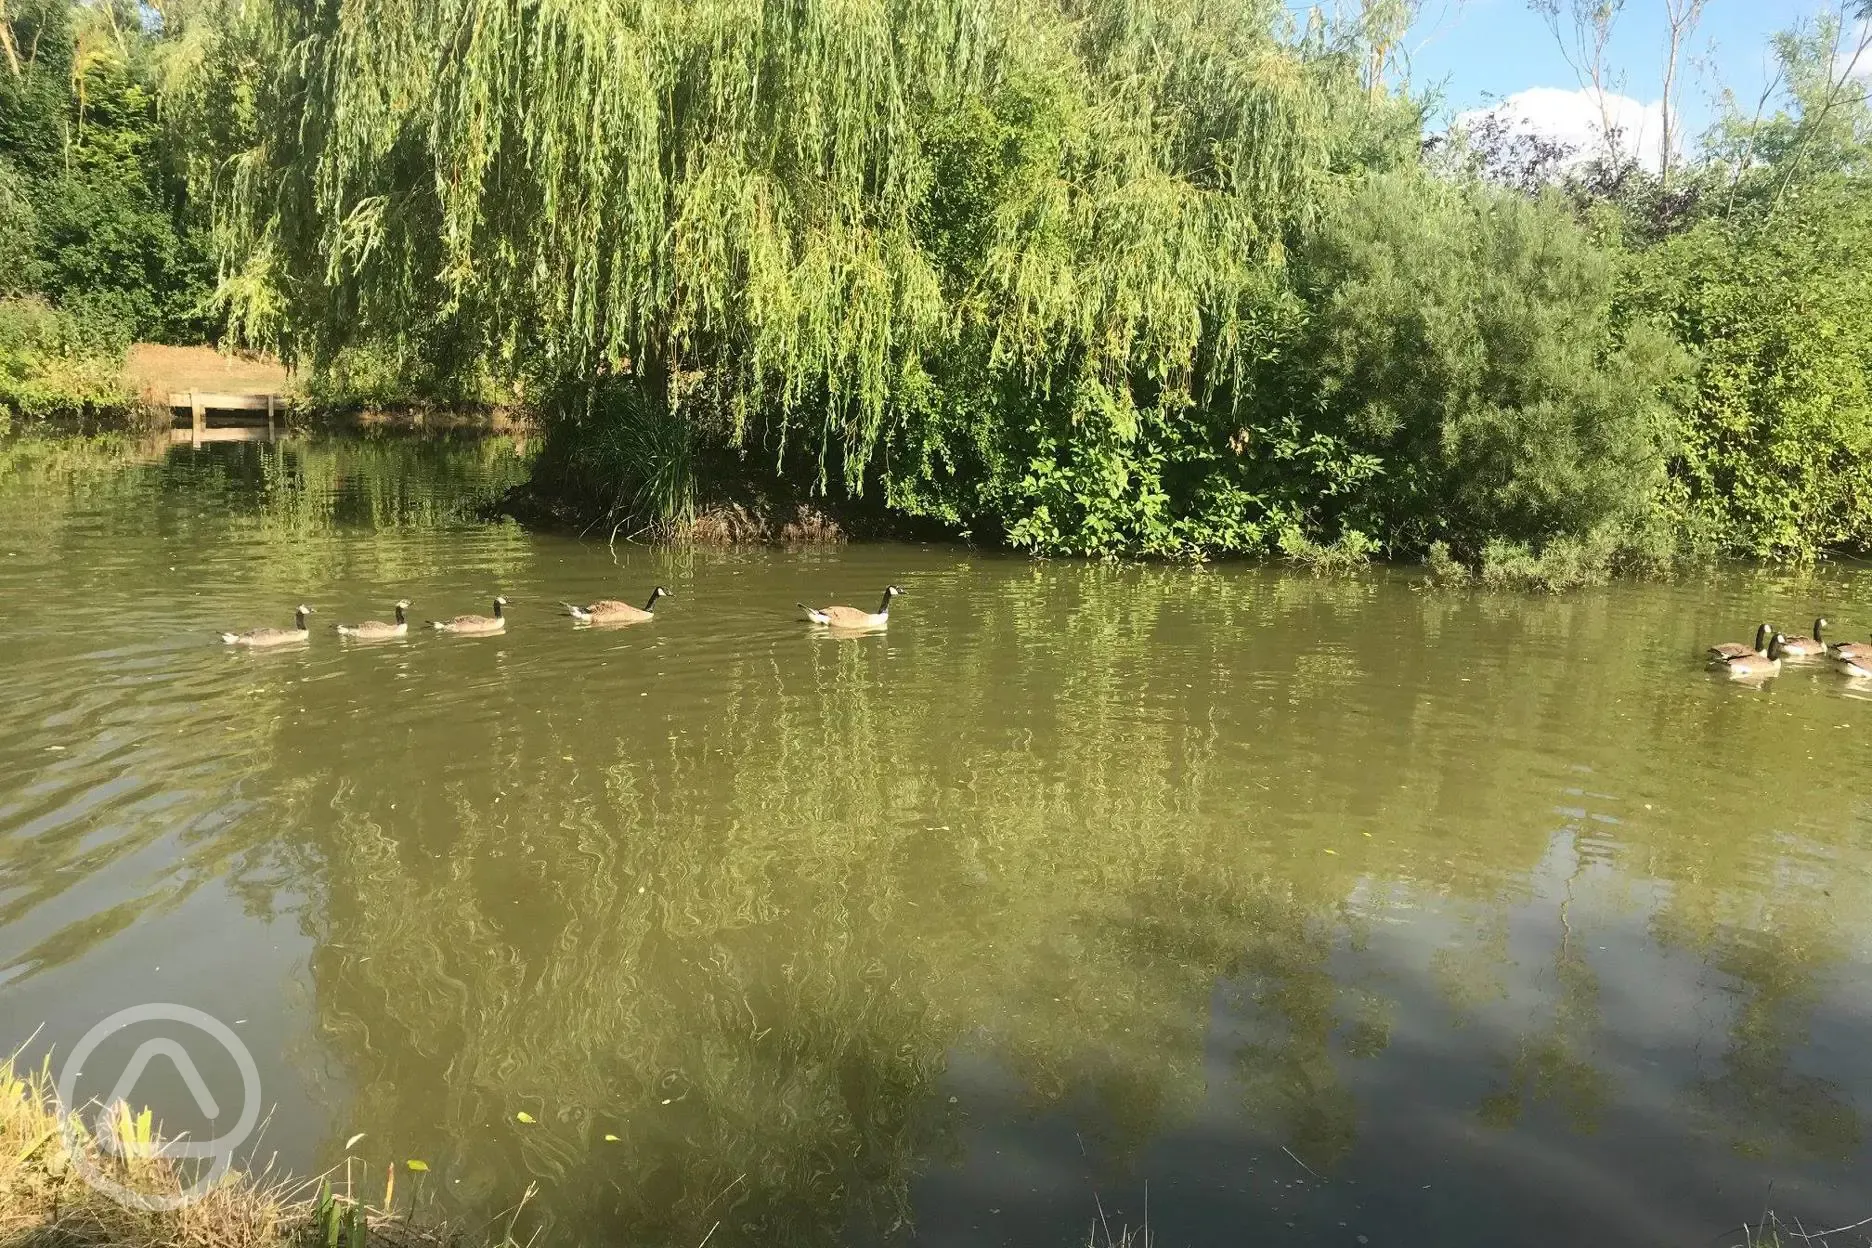 Geese on the fishing lake